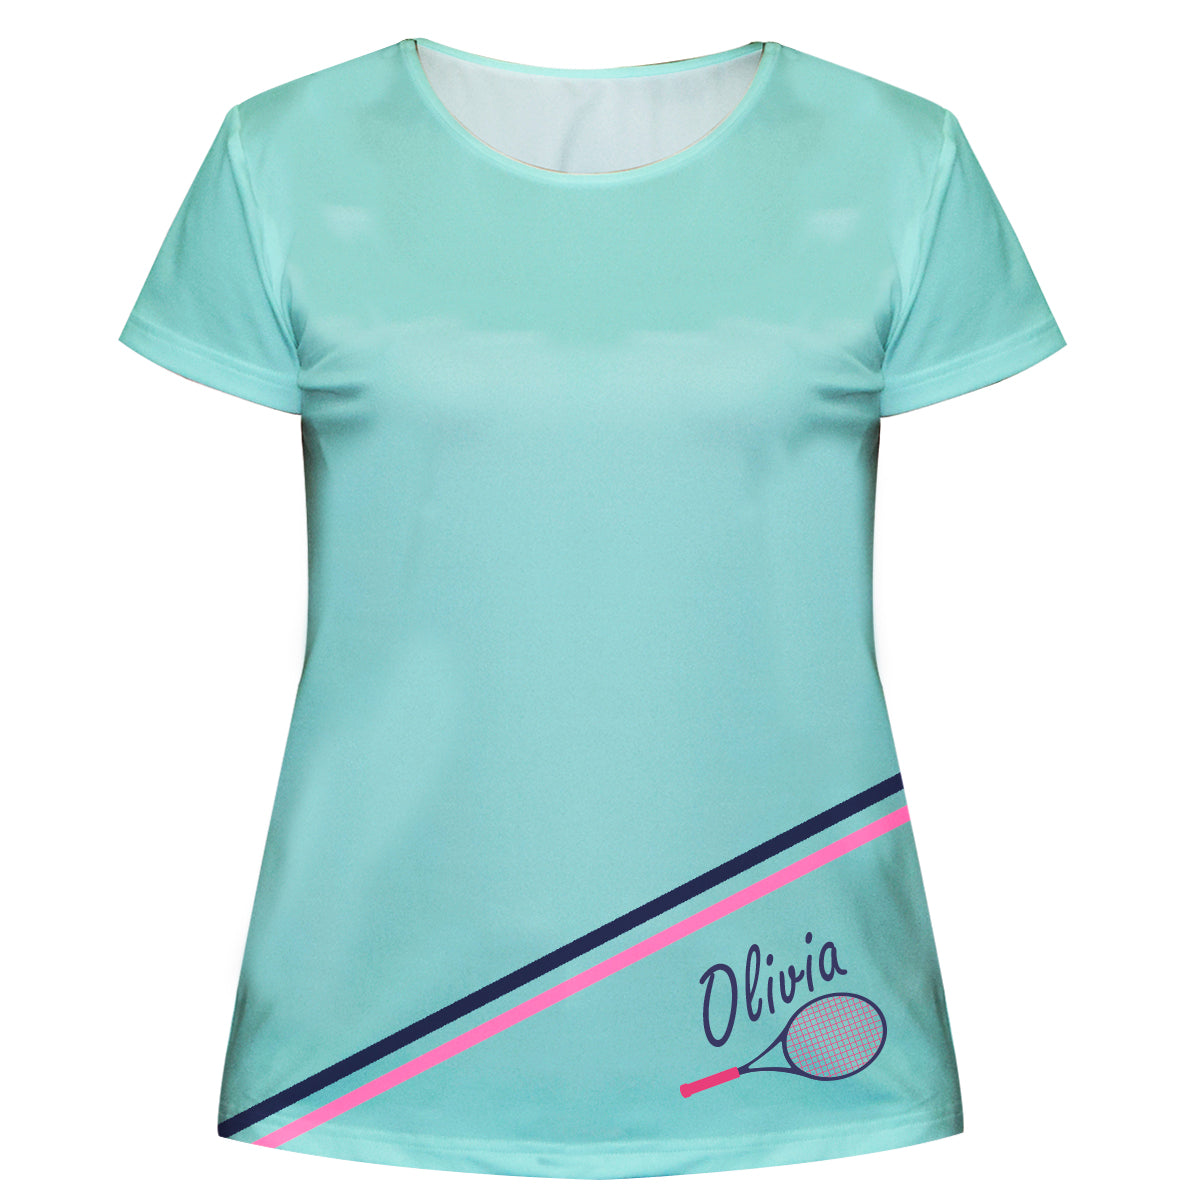 Tennis Name Turquoise Short Sleeve Tee Shirt